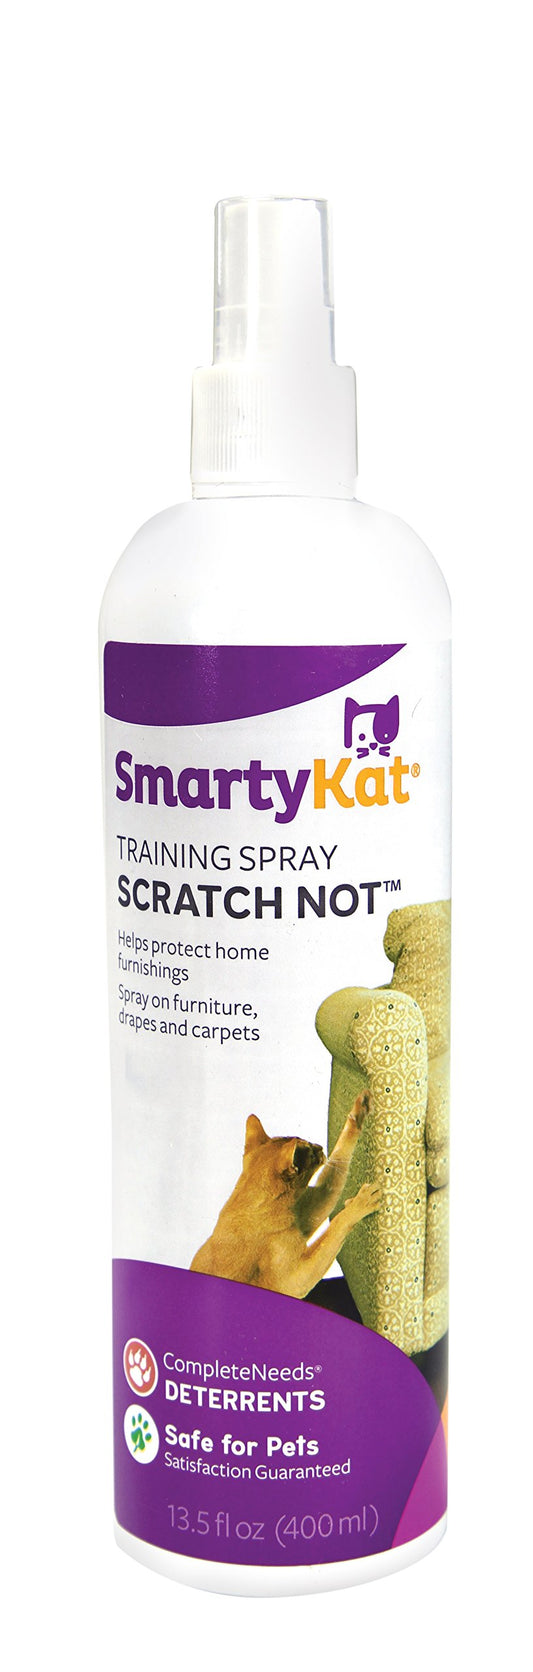 SmartyKat Scratch Not Anti-Scratch Training Spray Scratch Deterrent